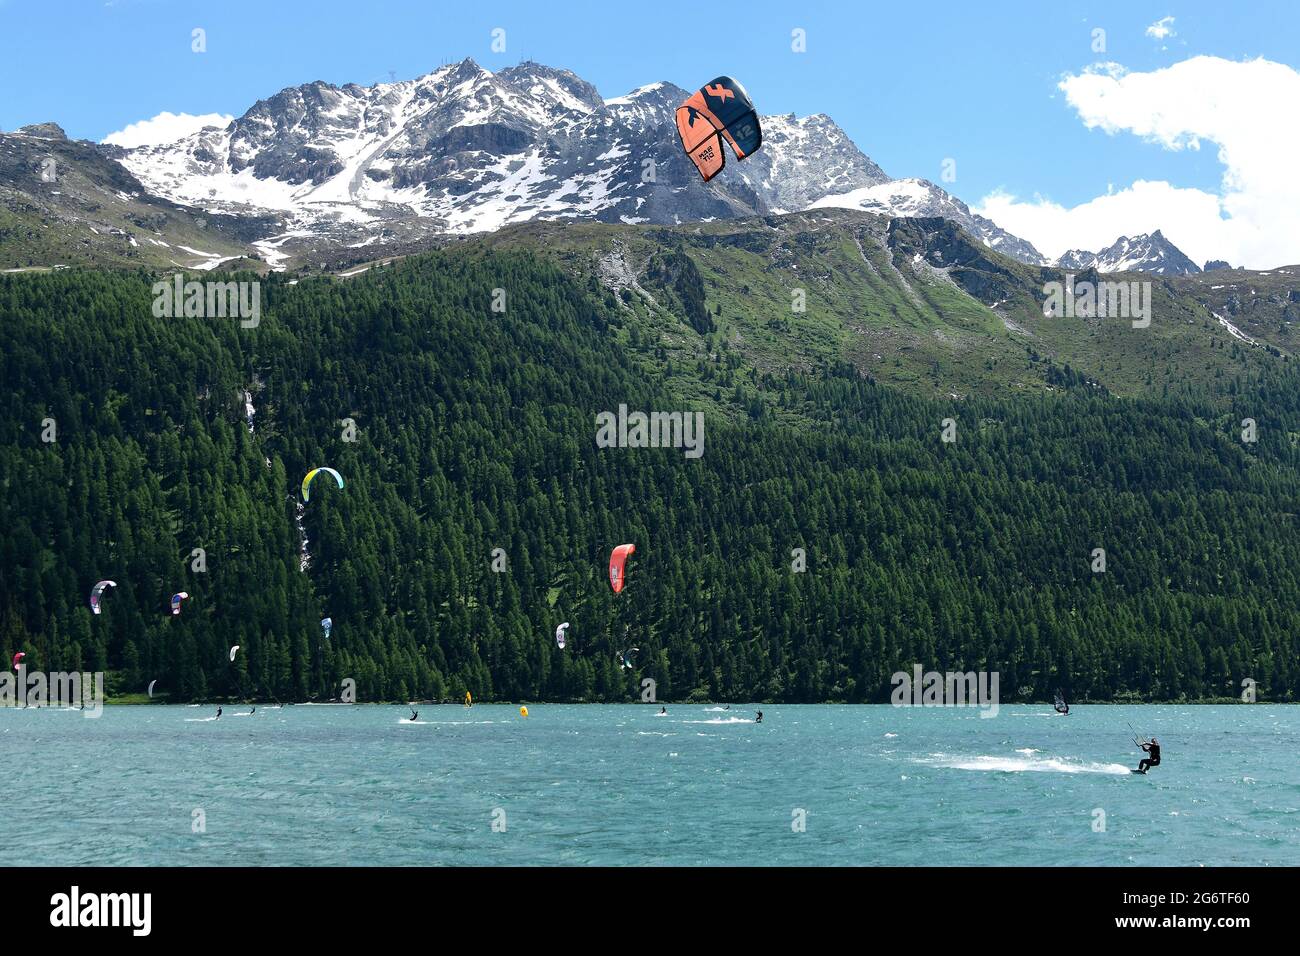 Kitesurfers on Lake Silvaplana in the Upper Engadine, Switzerland. Stock Photo